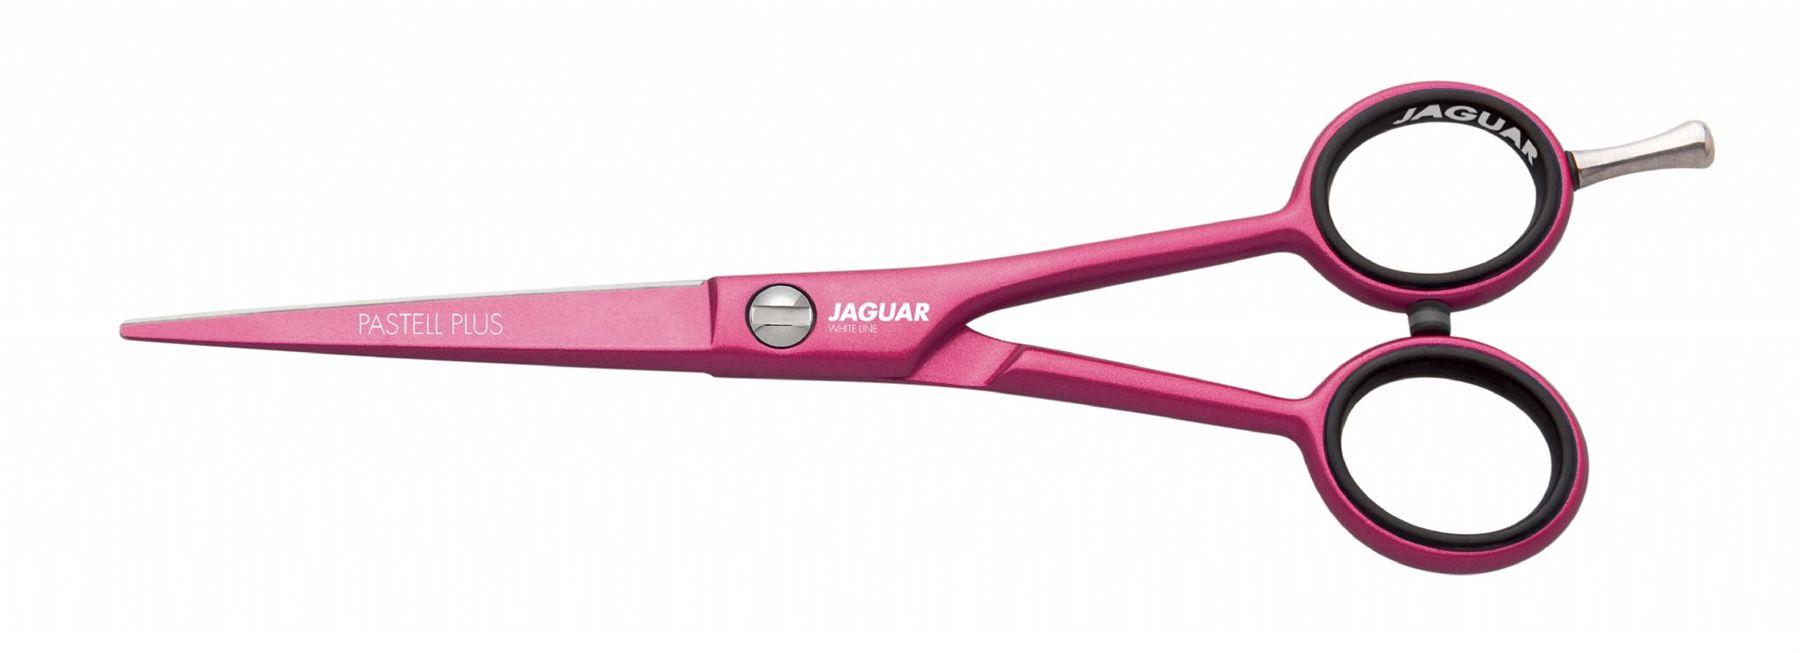 Jaguar Pastell Plus 5.5" Hairdressing Scissors - Candy